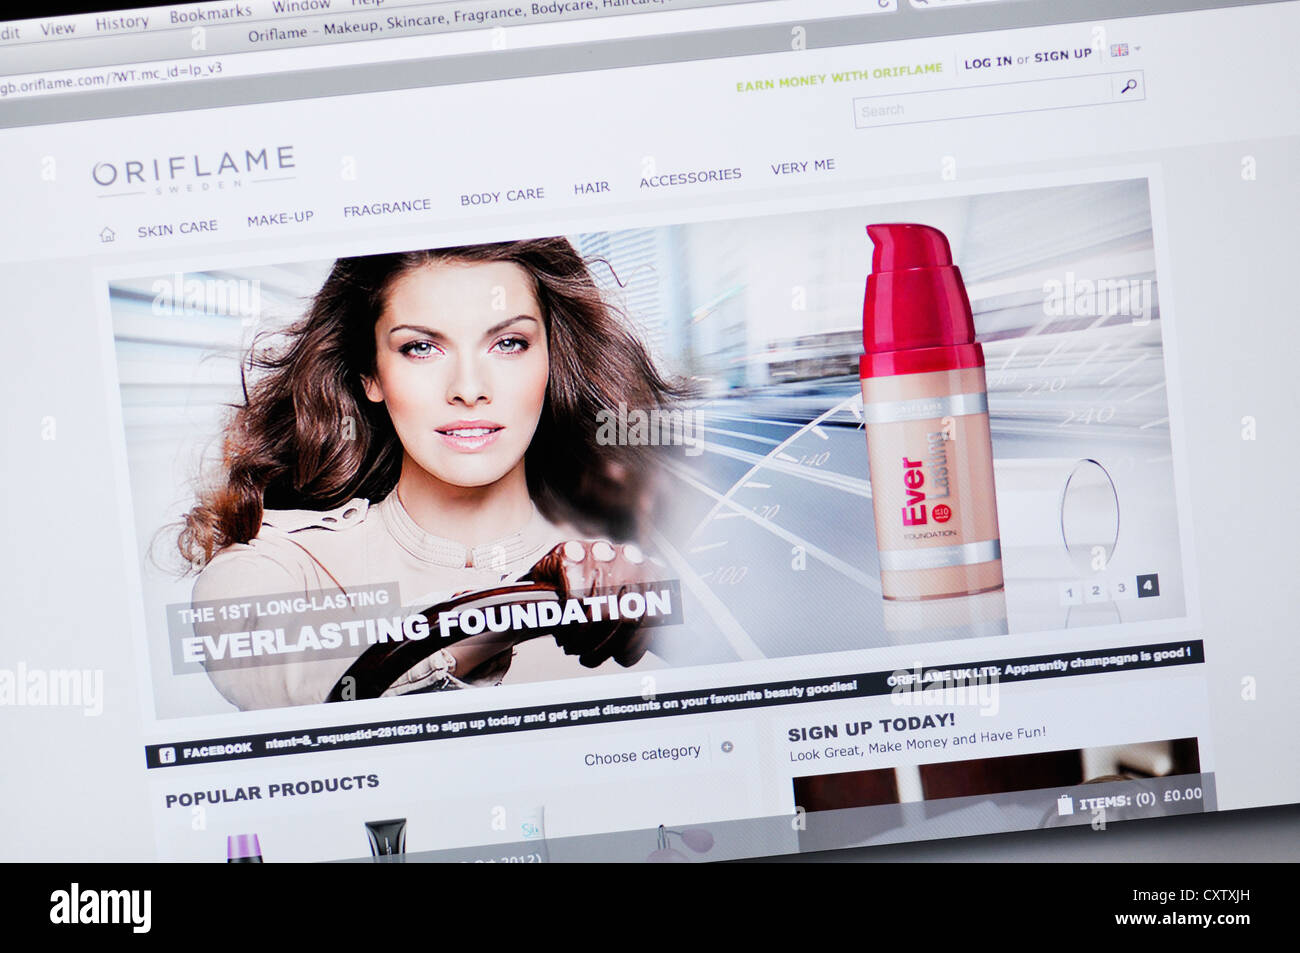 Oriflame Website - Beauty-Care-Unternehmen Stockfoto